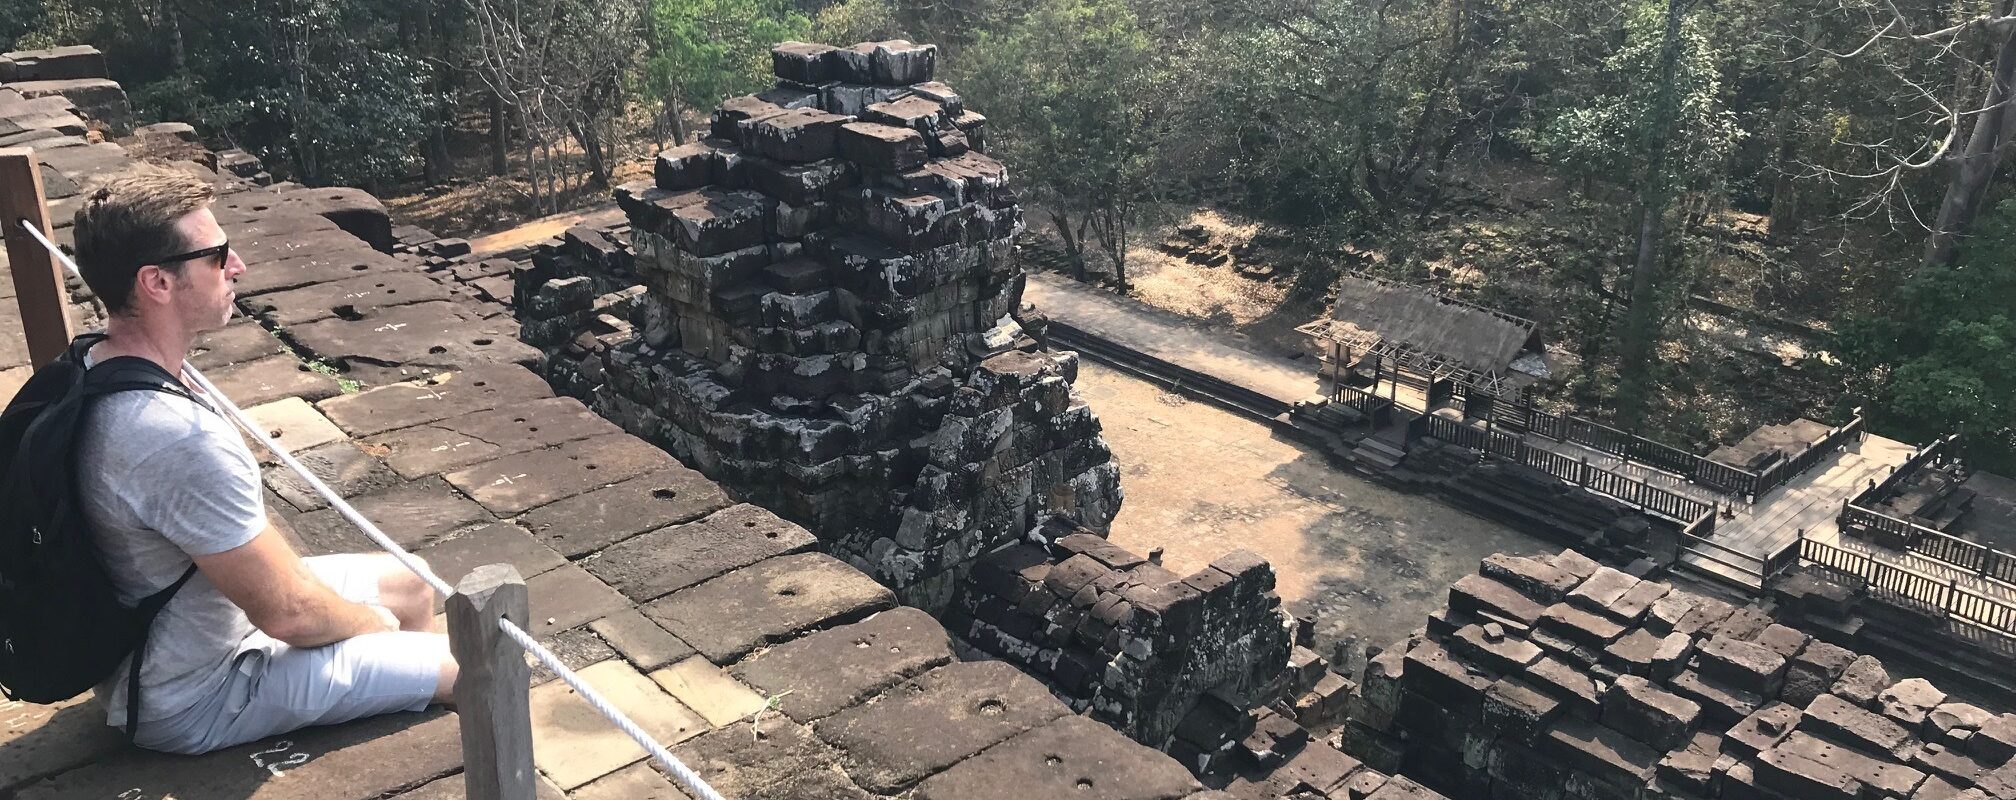 Aaron tour leading in Angkor Wat, Cambodia